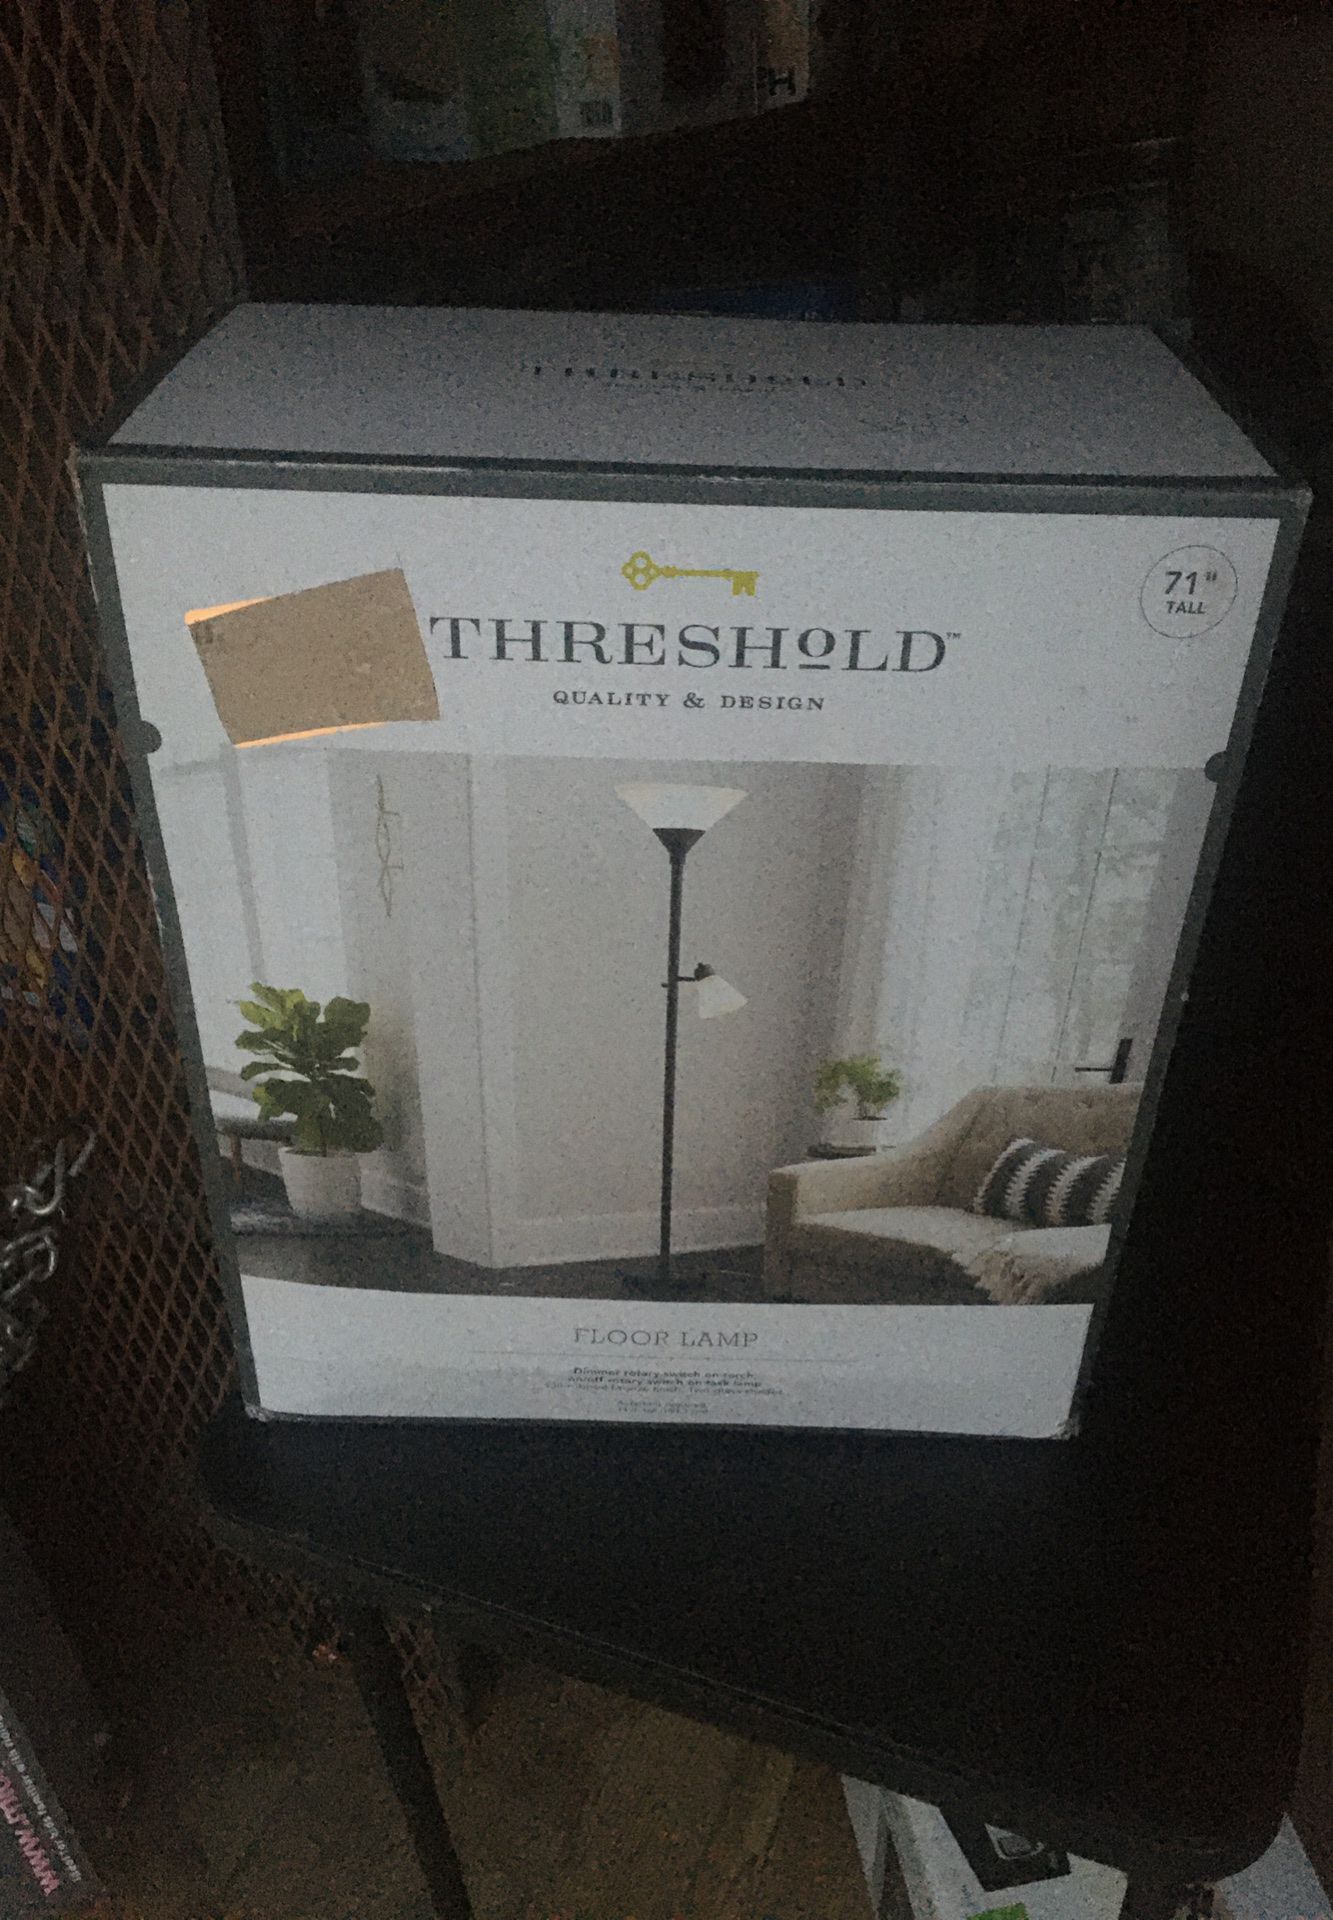 Threshold 71” Floor Lamp